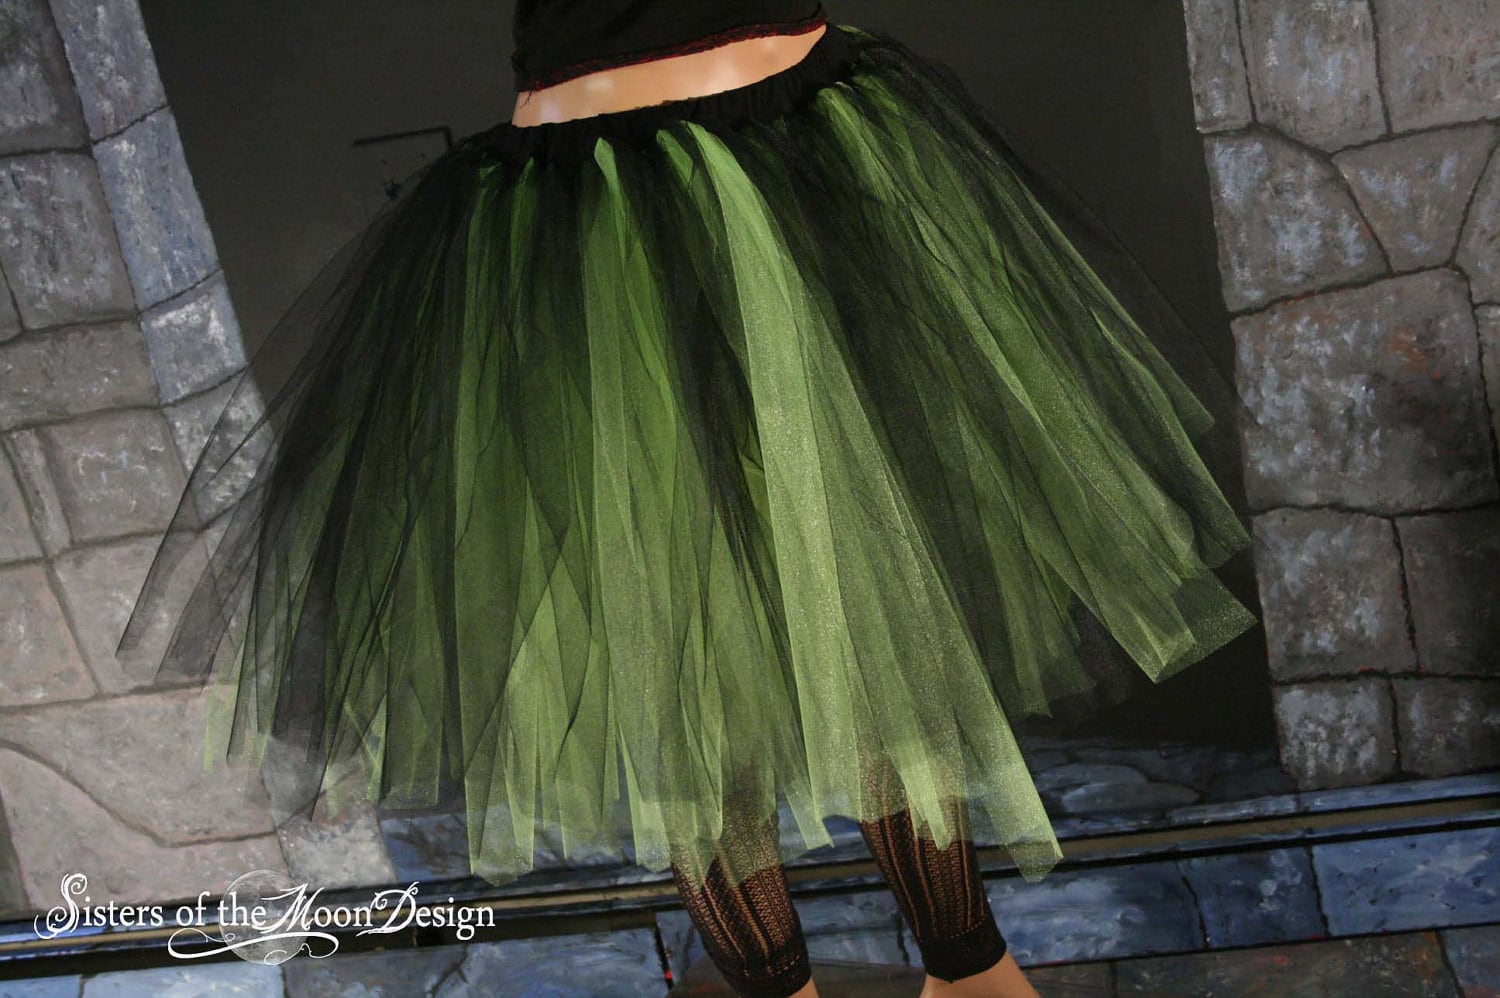 Tutu Jupe Soirée robe fantaisie Taille élastique Fée Halloween Ballet Hen Costume 